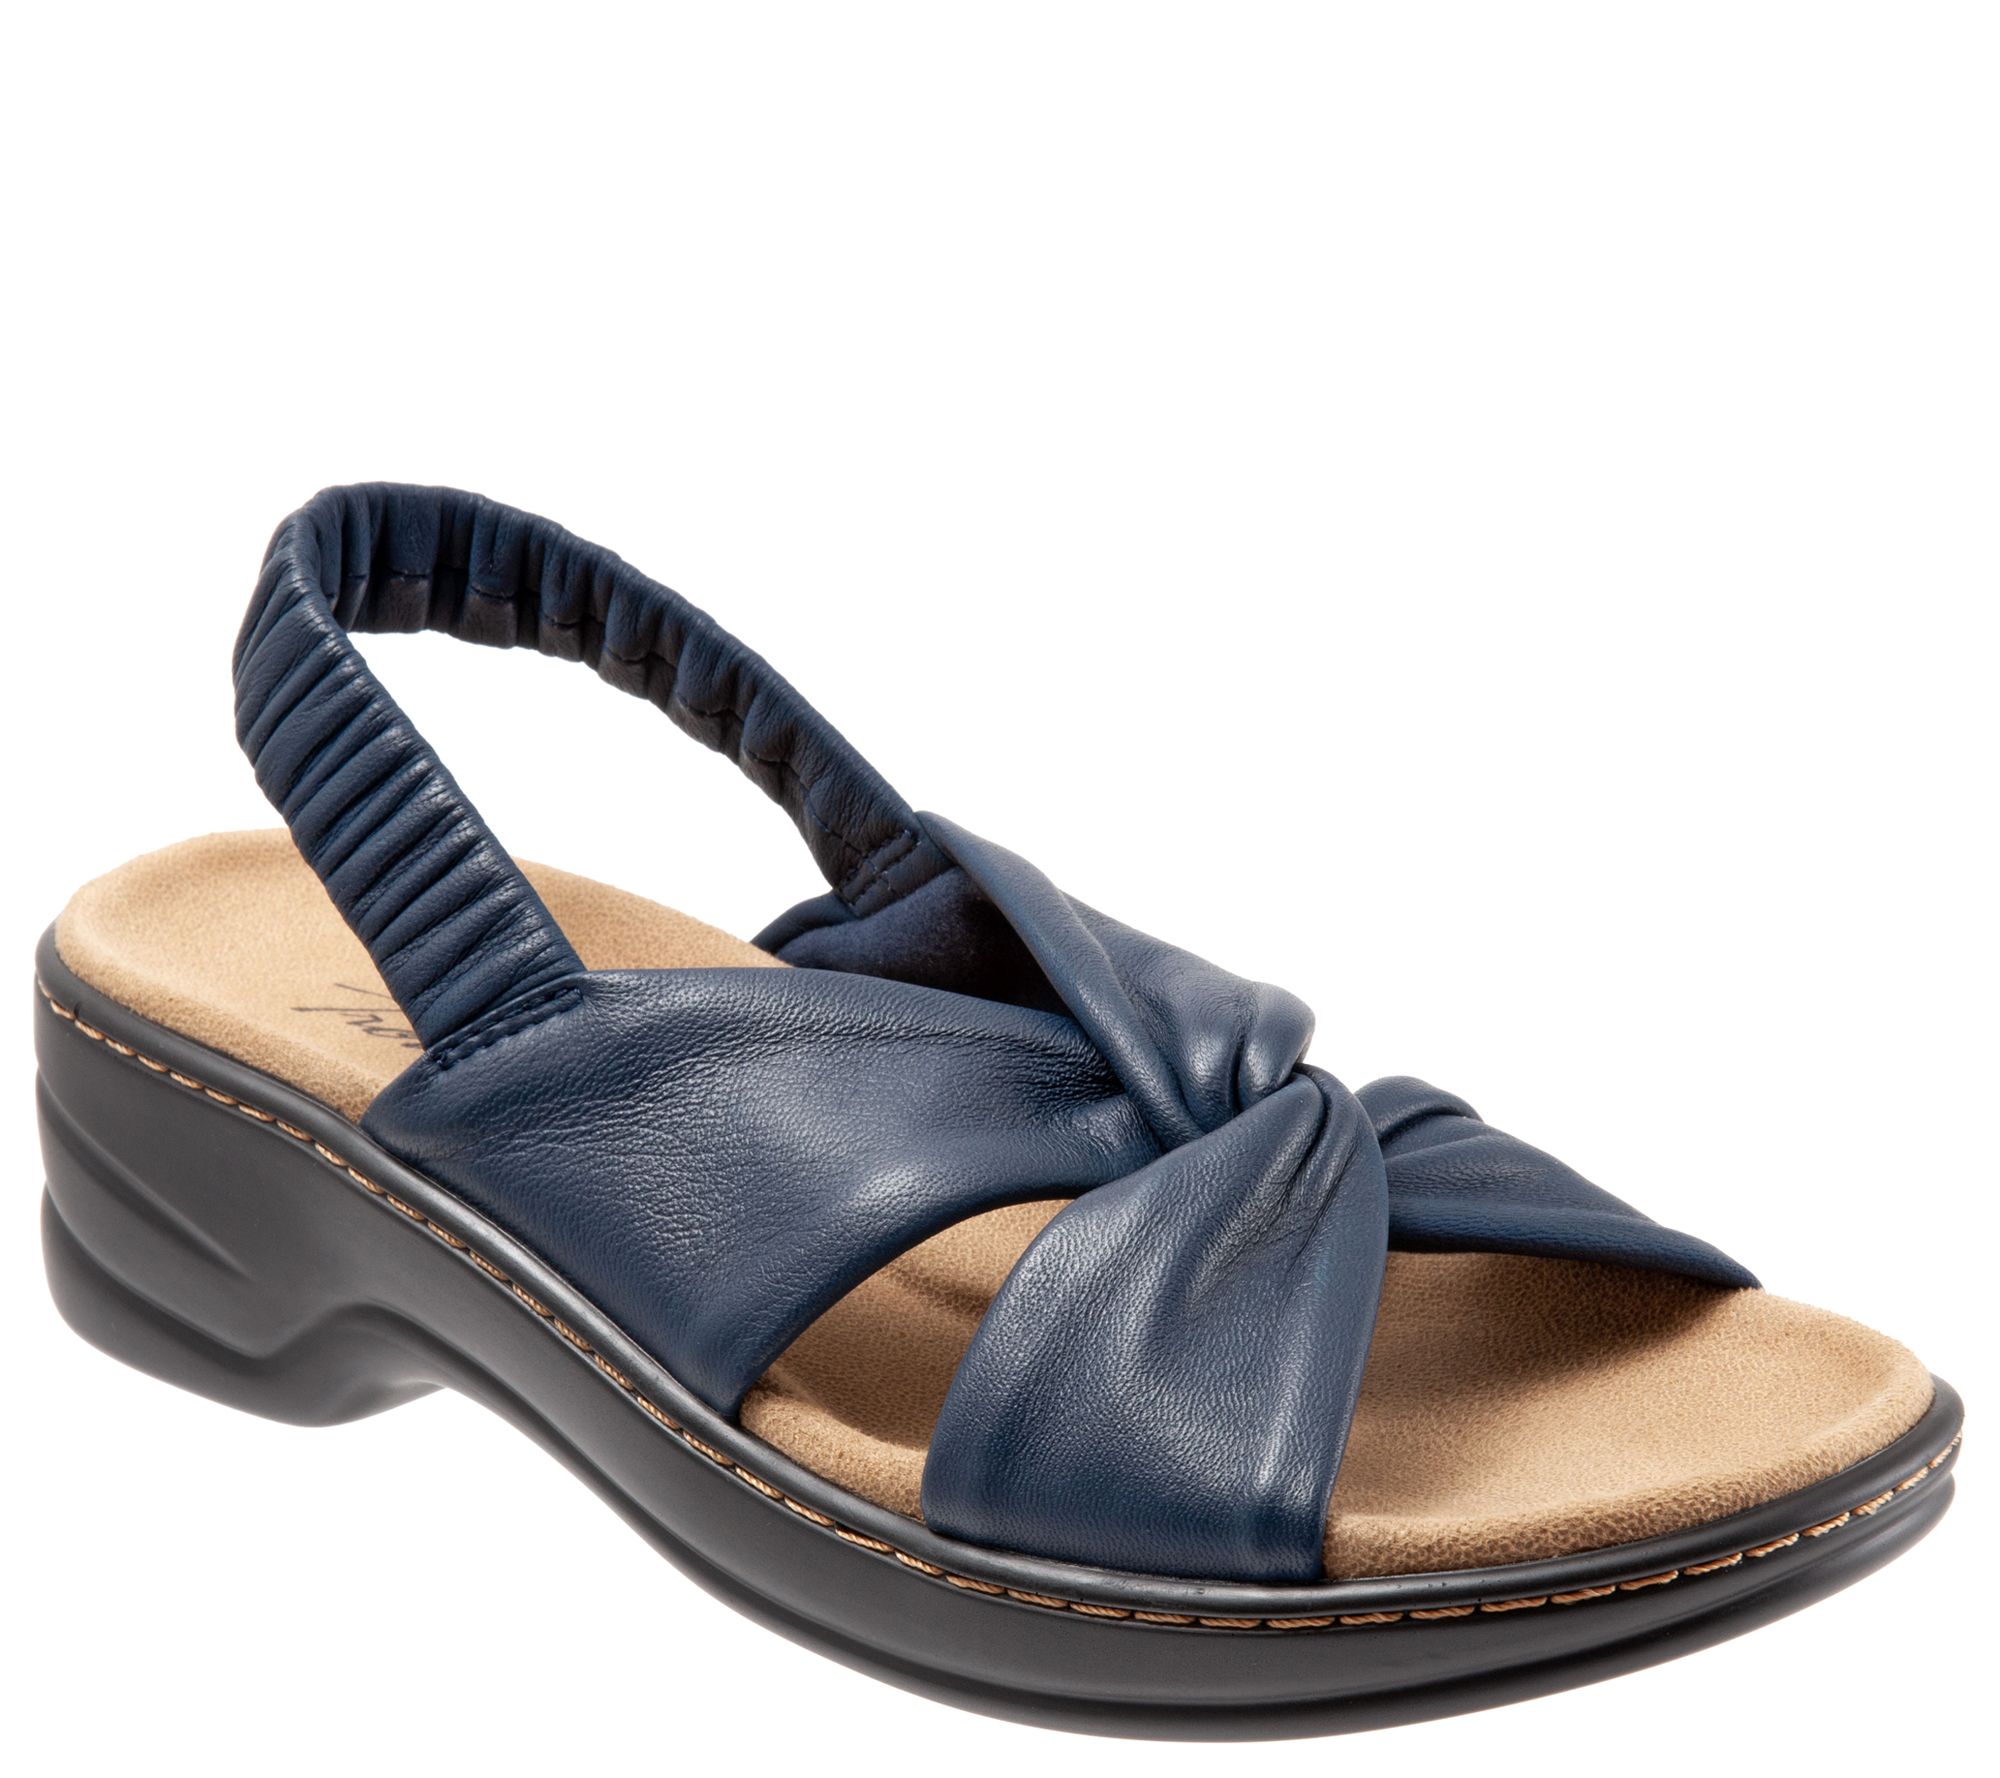 Trotters Soft Leather Sandals - Nella - QVC.com